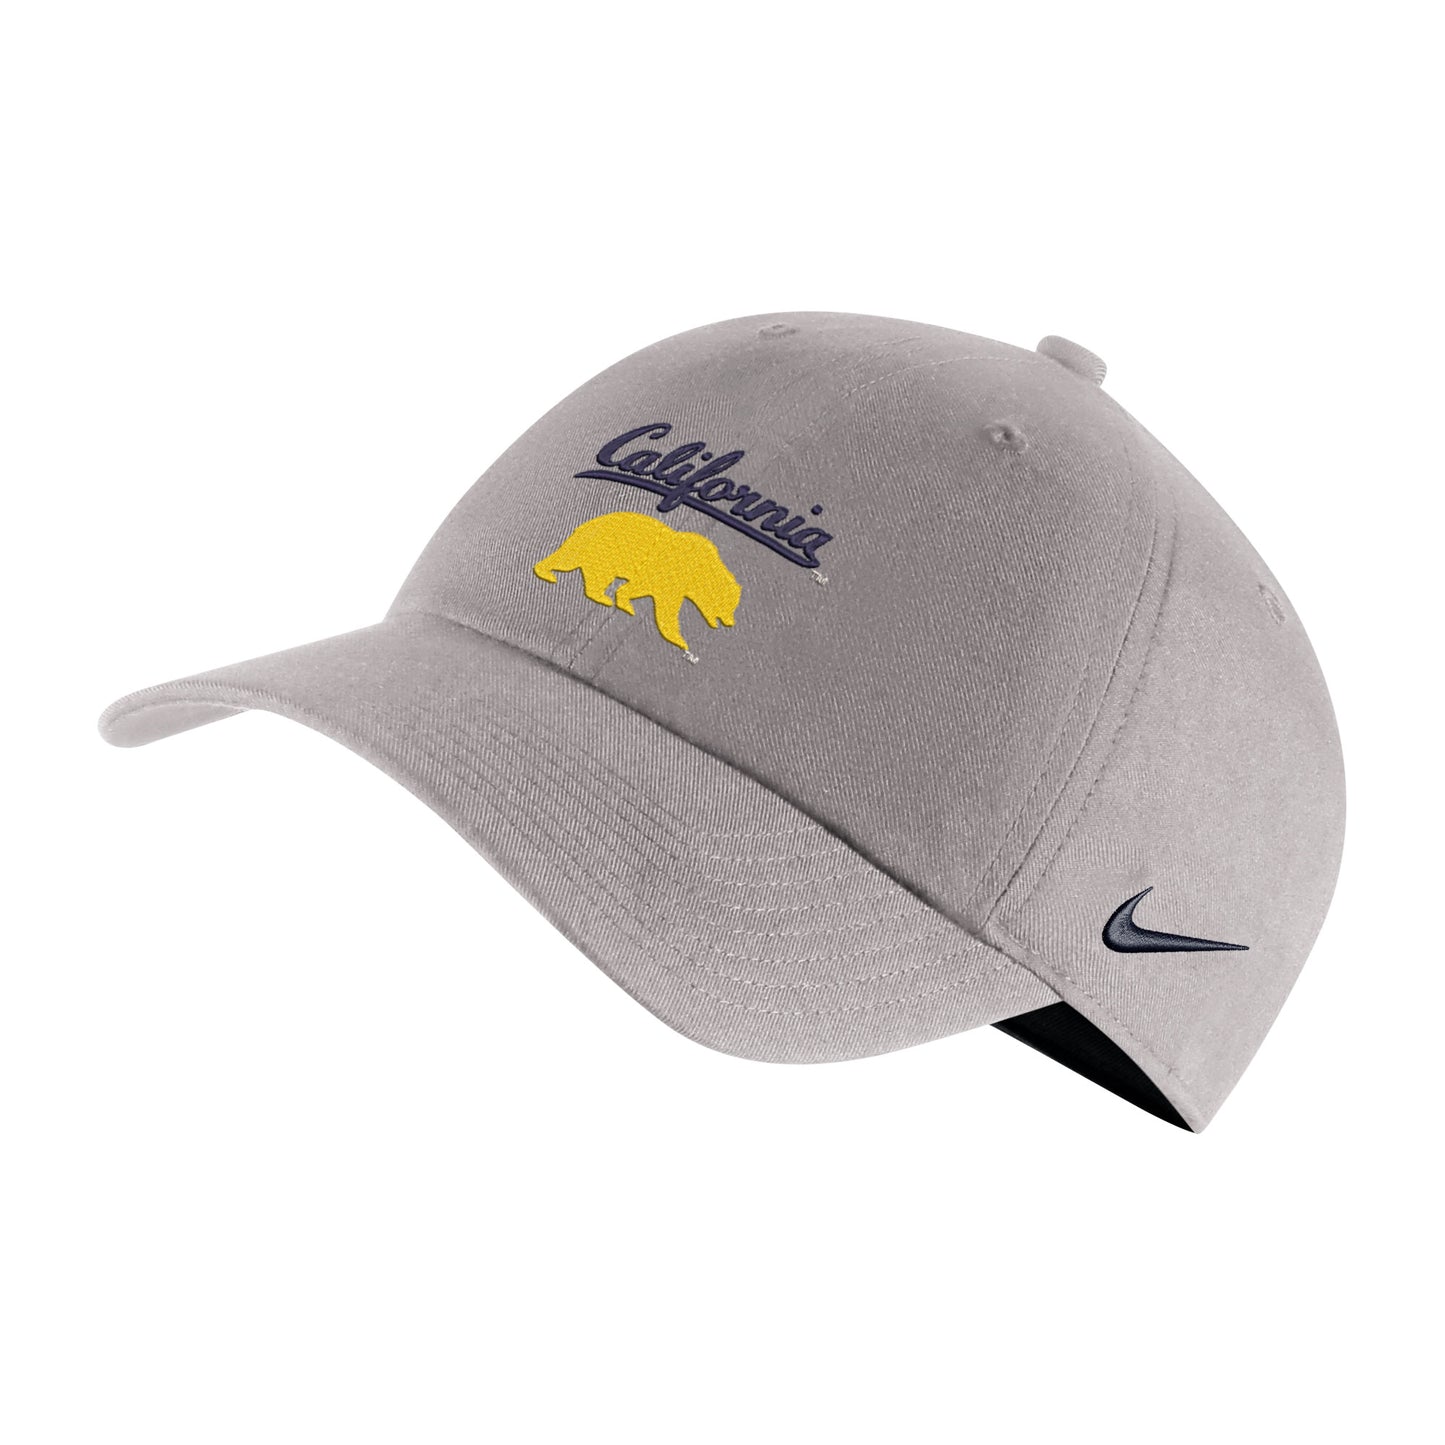 U.C. Berkeley Cal embroidered & Swoosh campus hat-Pewter-Shop College Wear